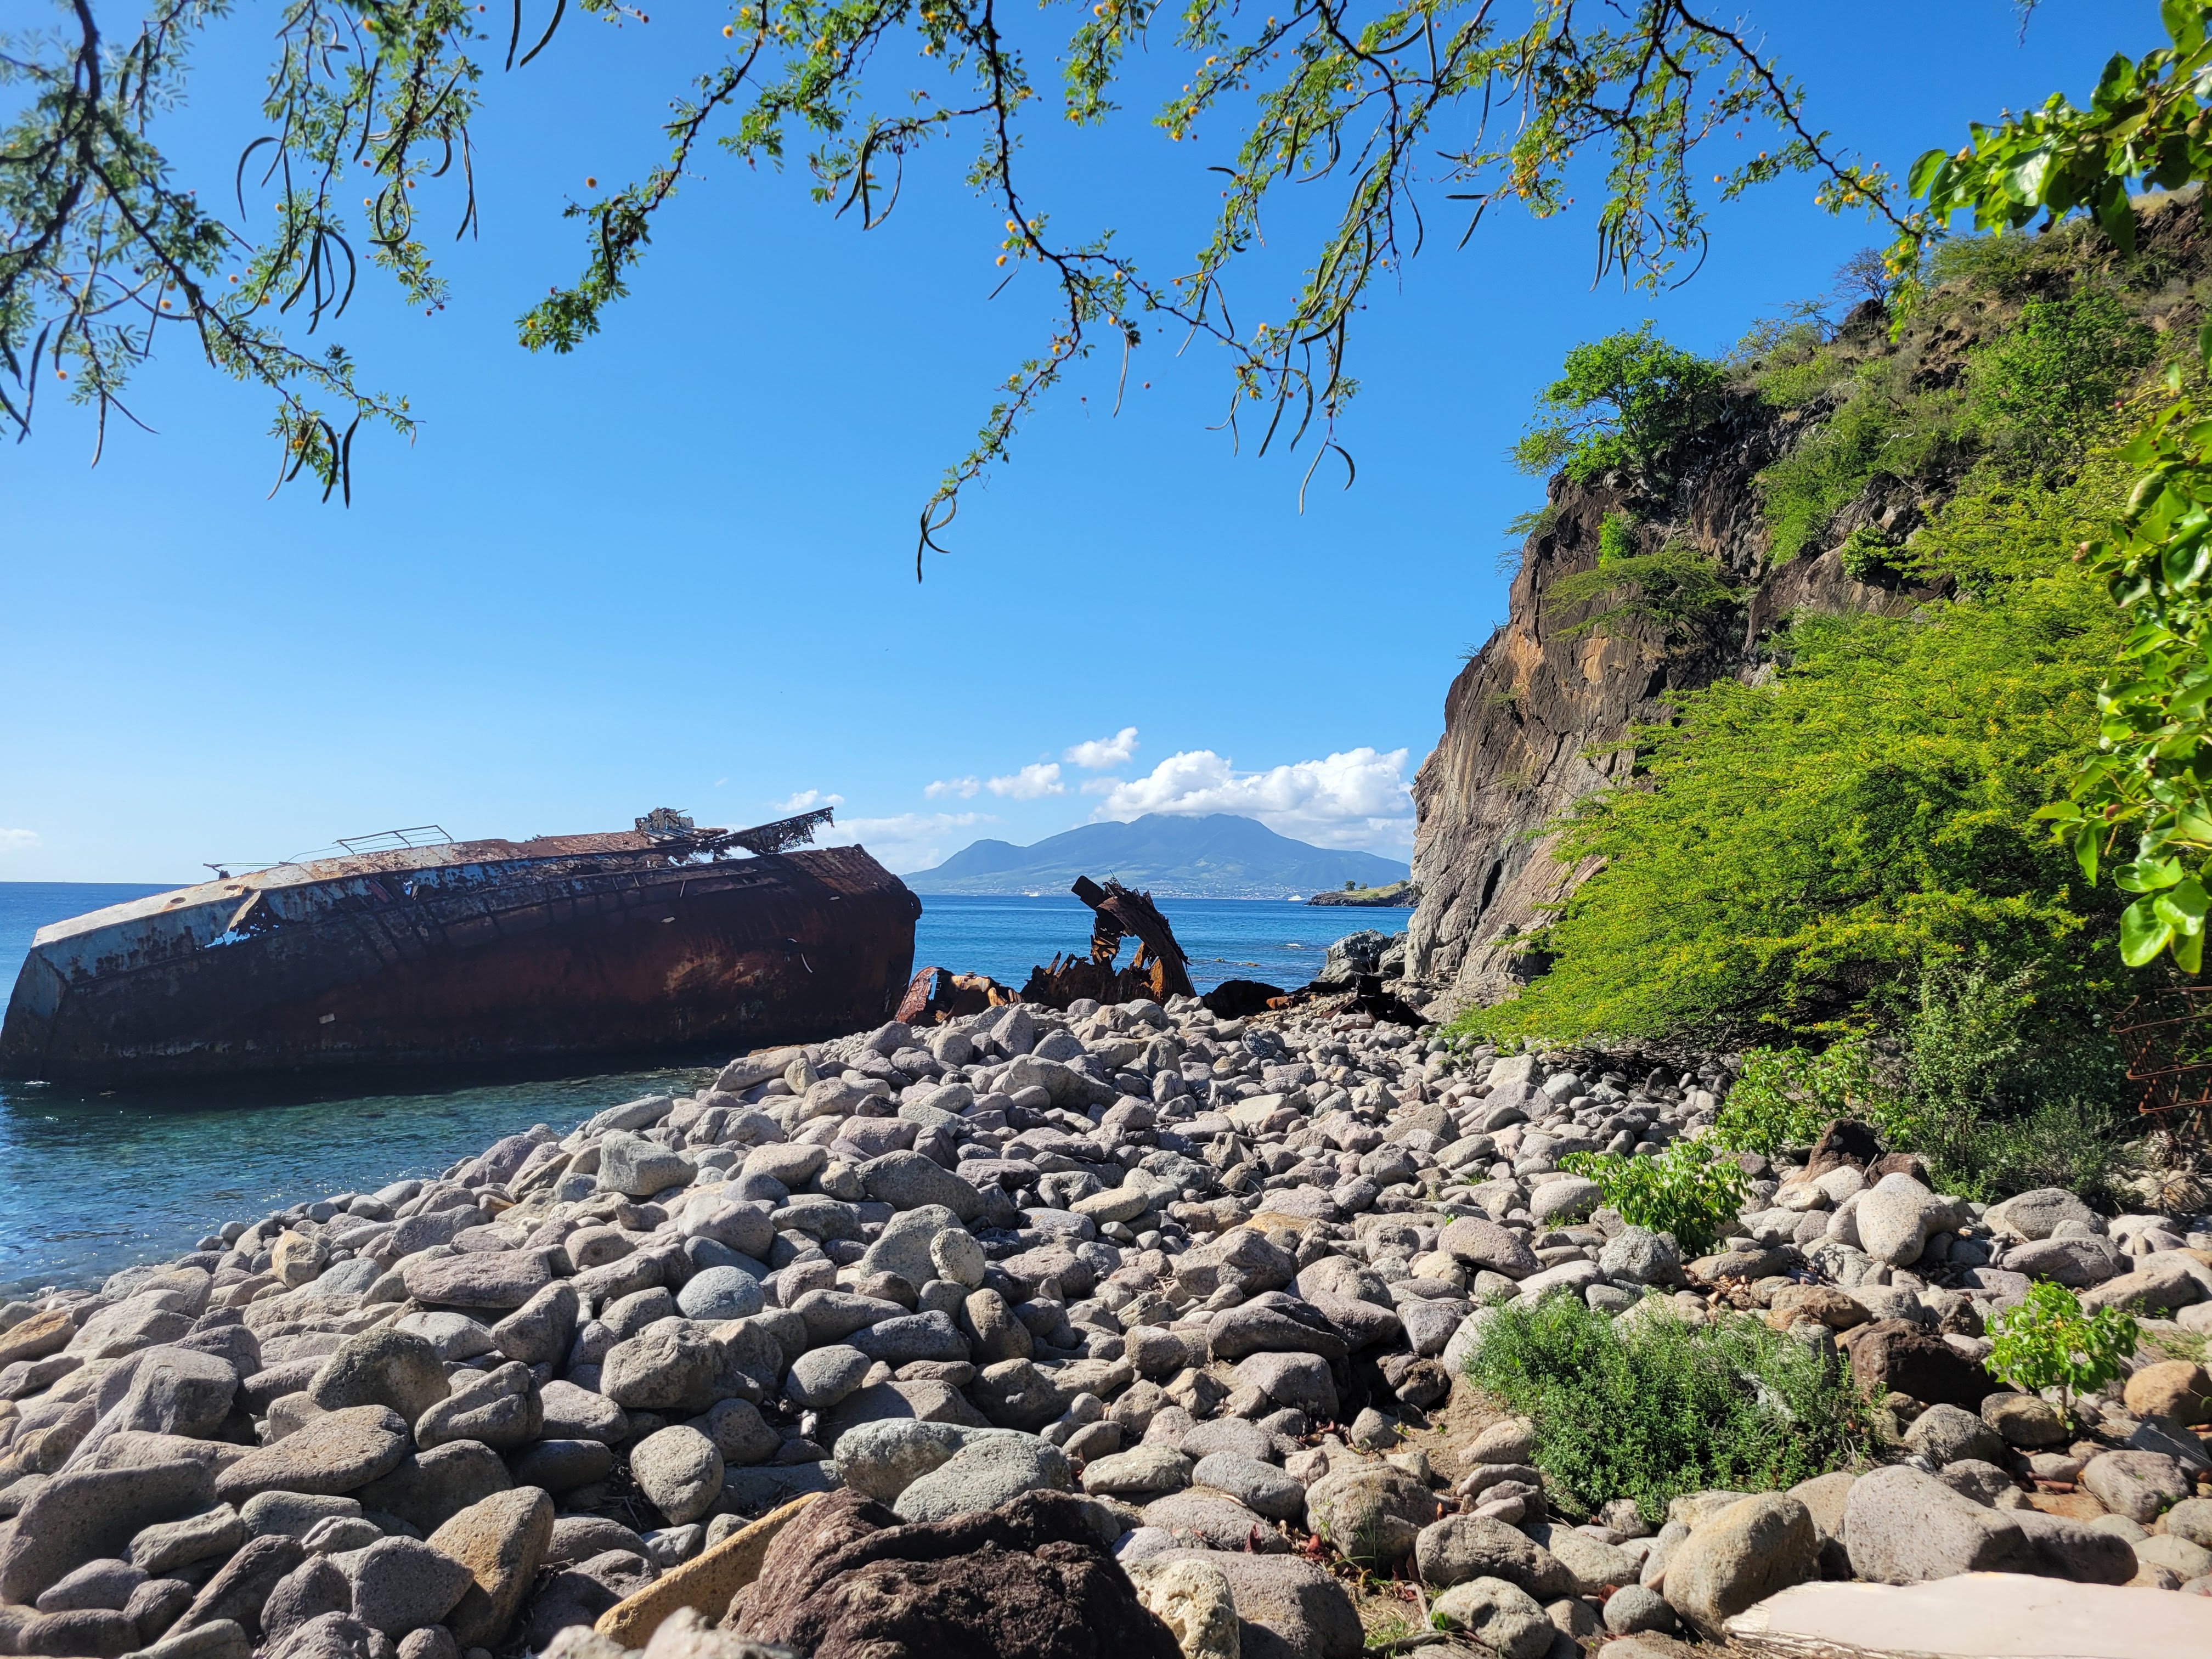 Shipwreck In Shitten Bay